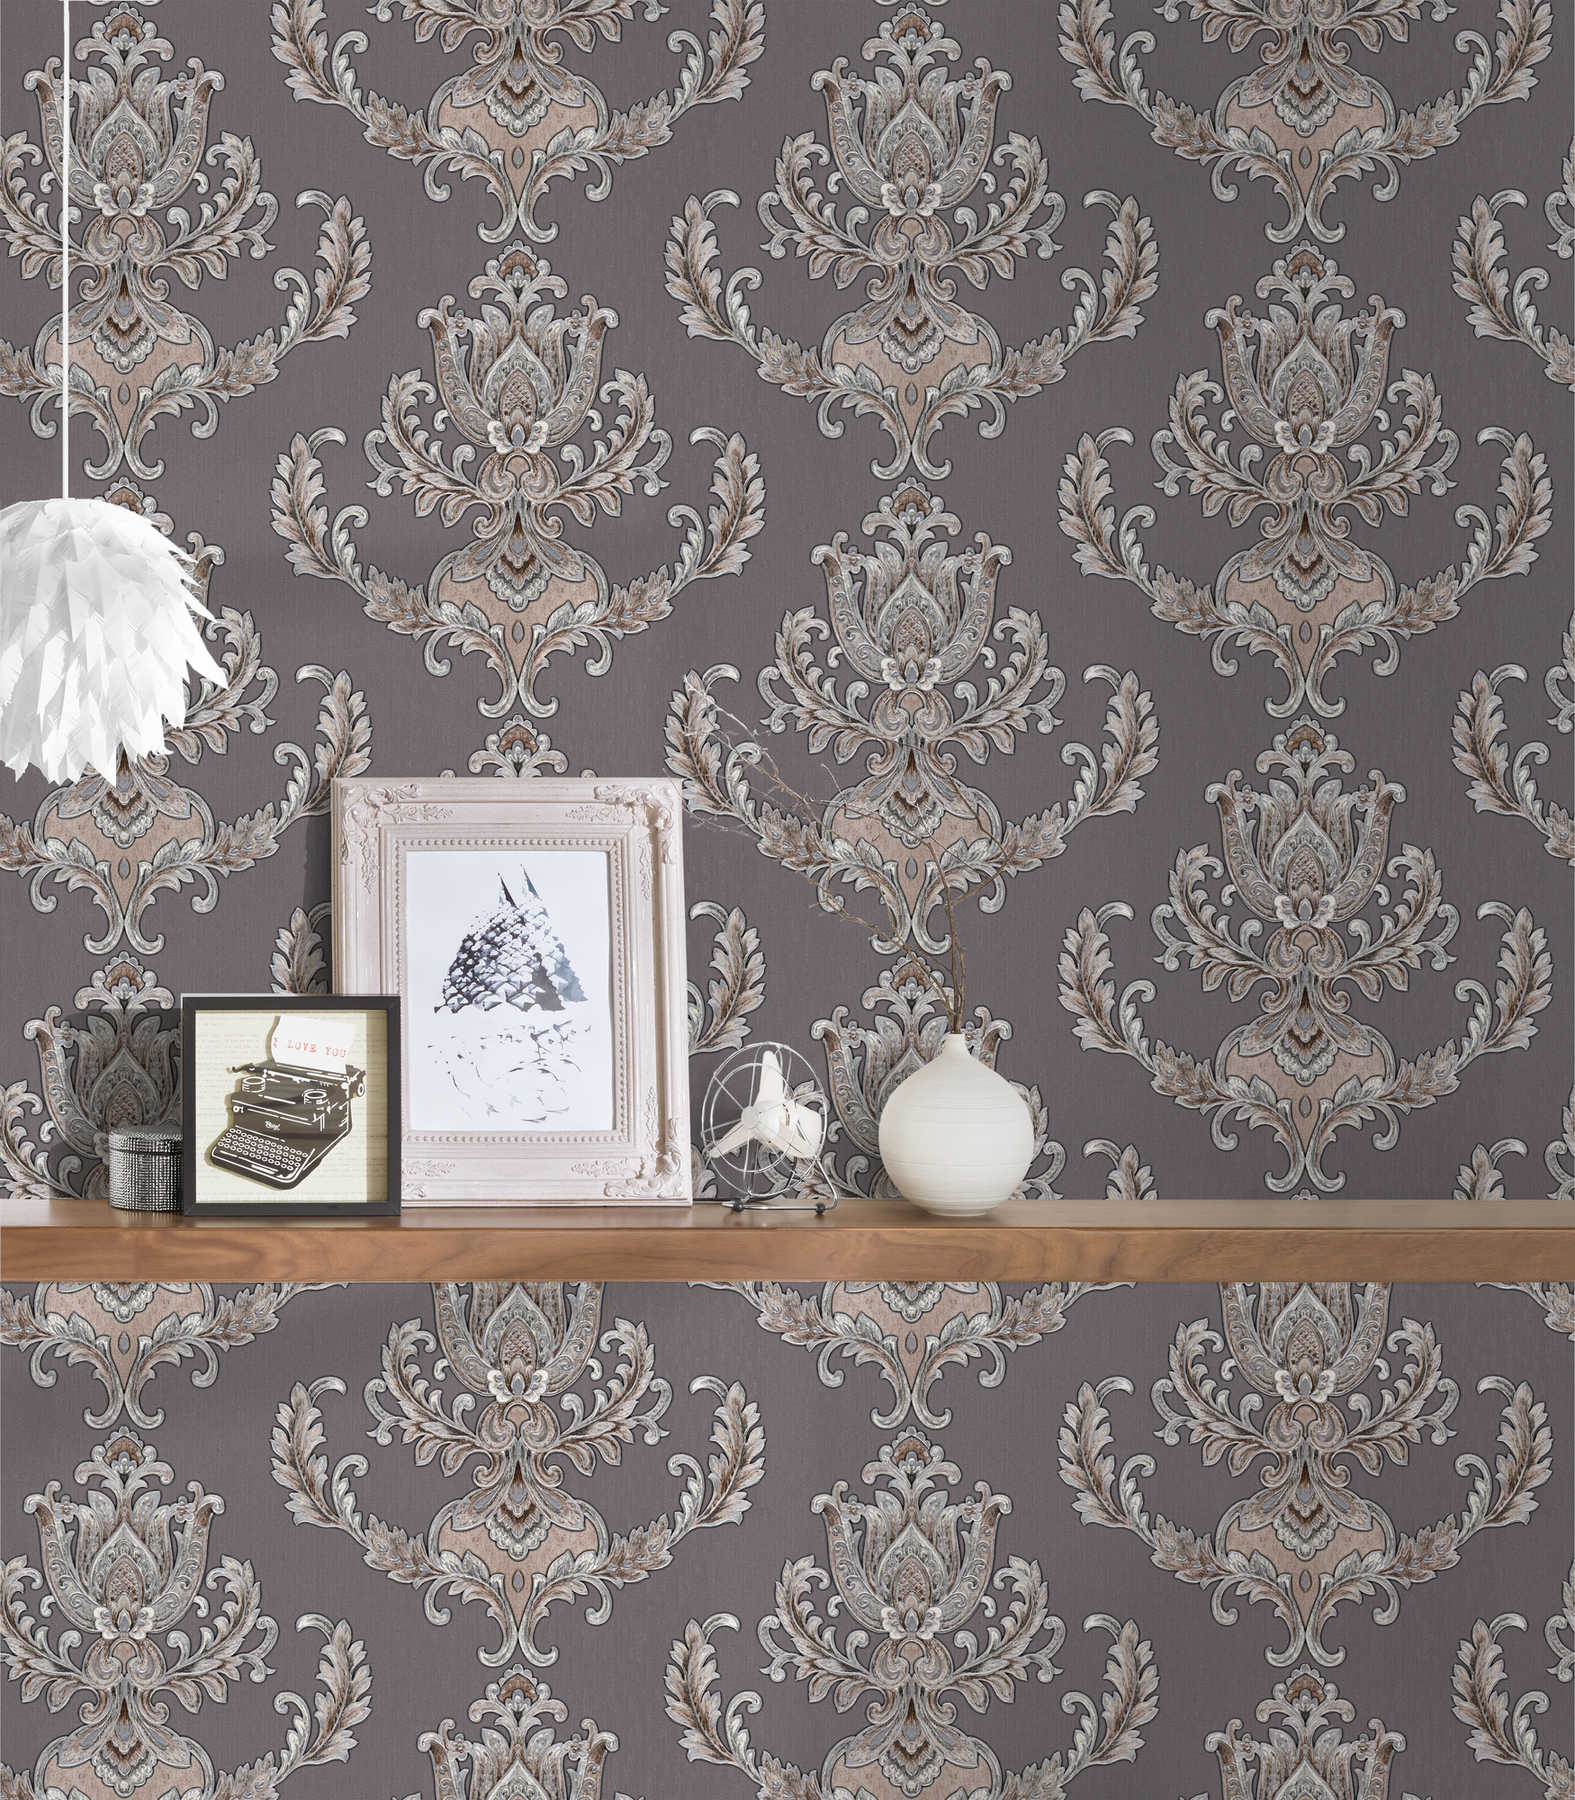             Metallic wallpaper with opulent ornament design - grey
        